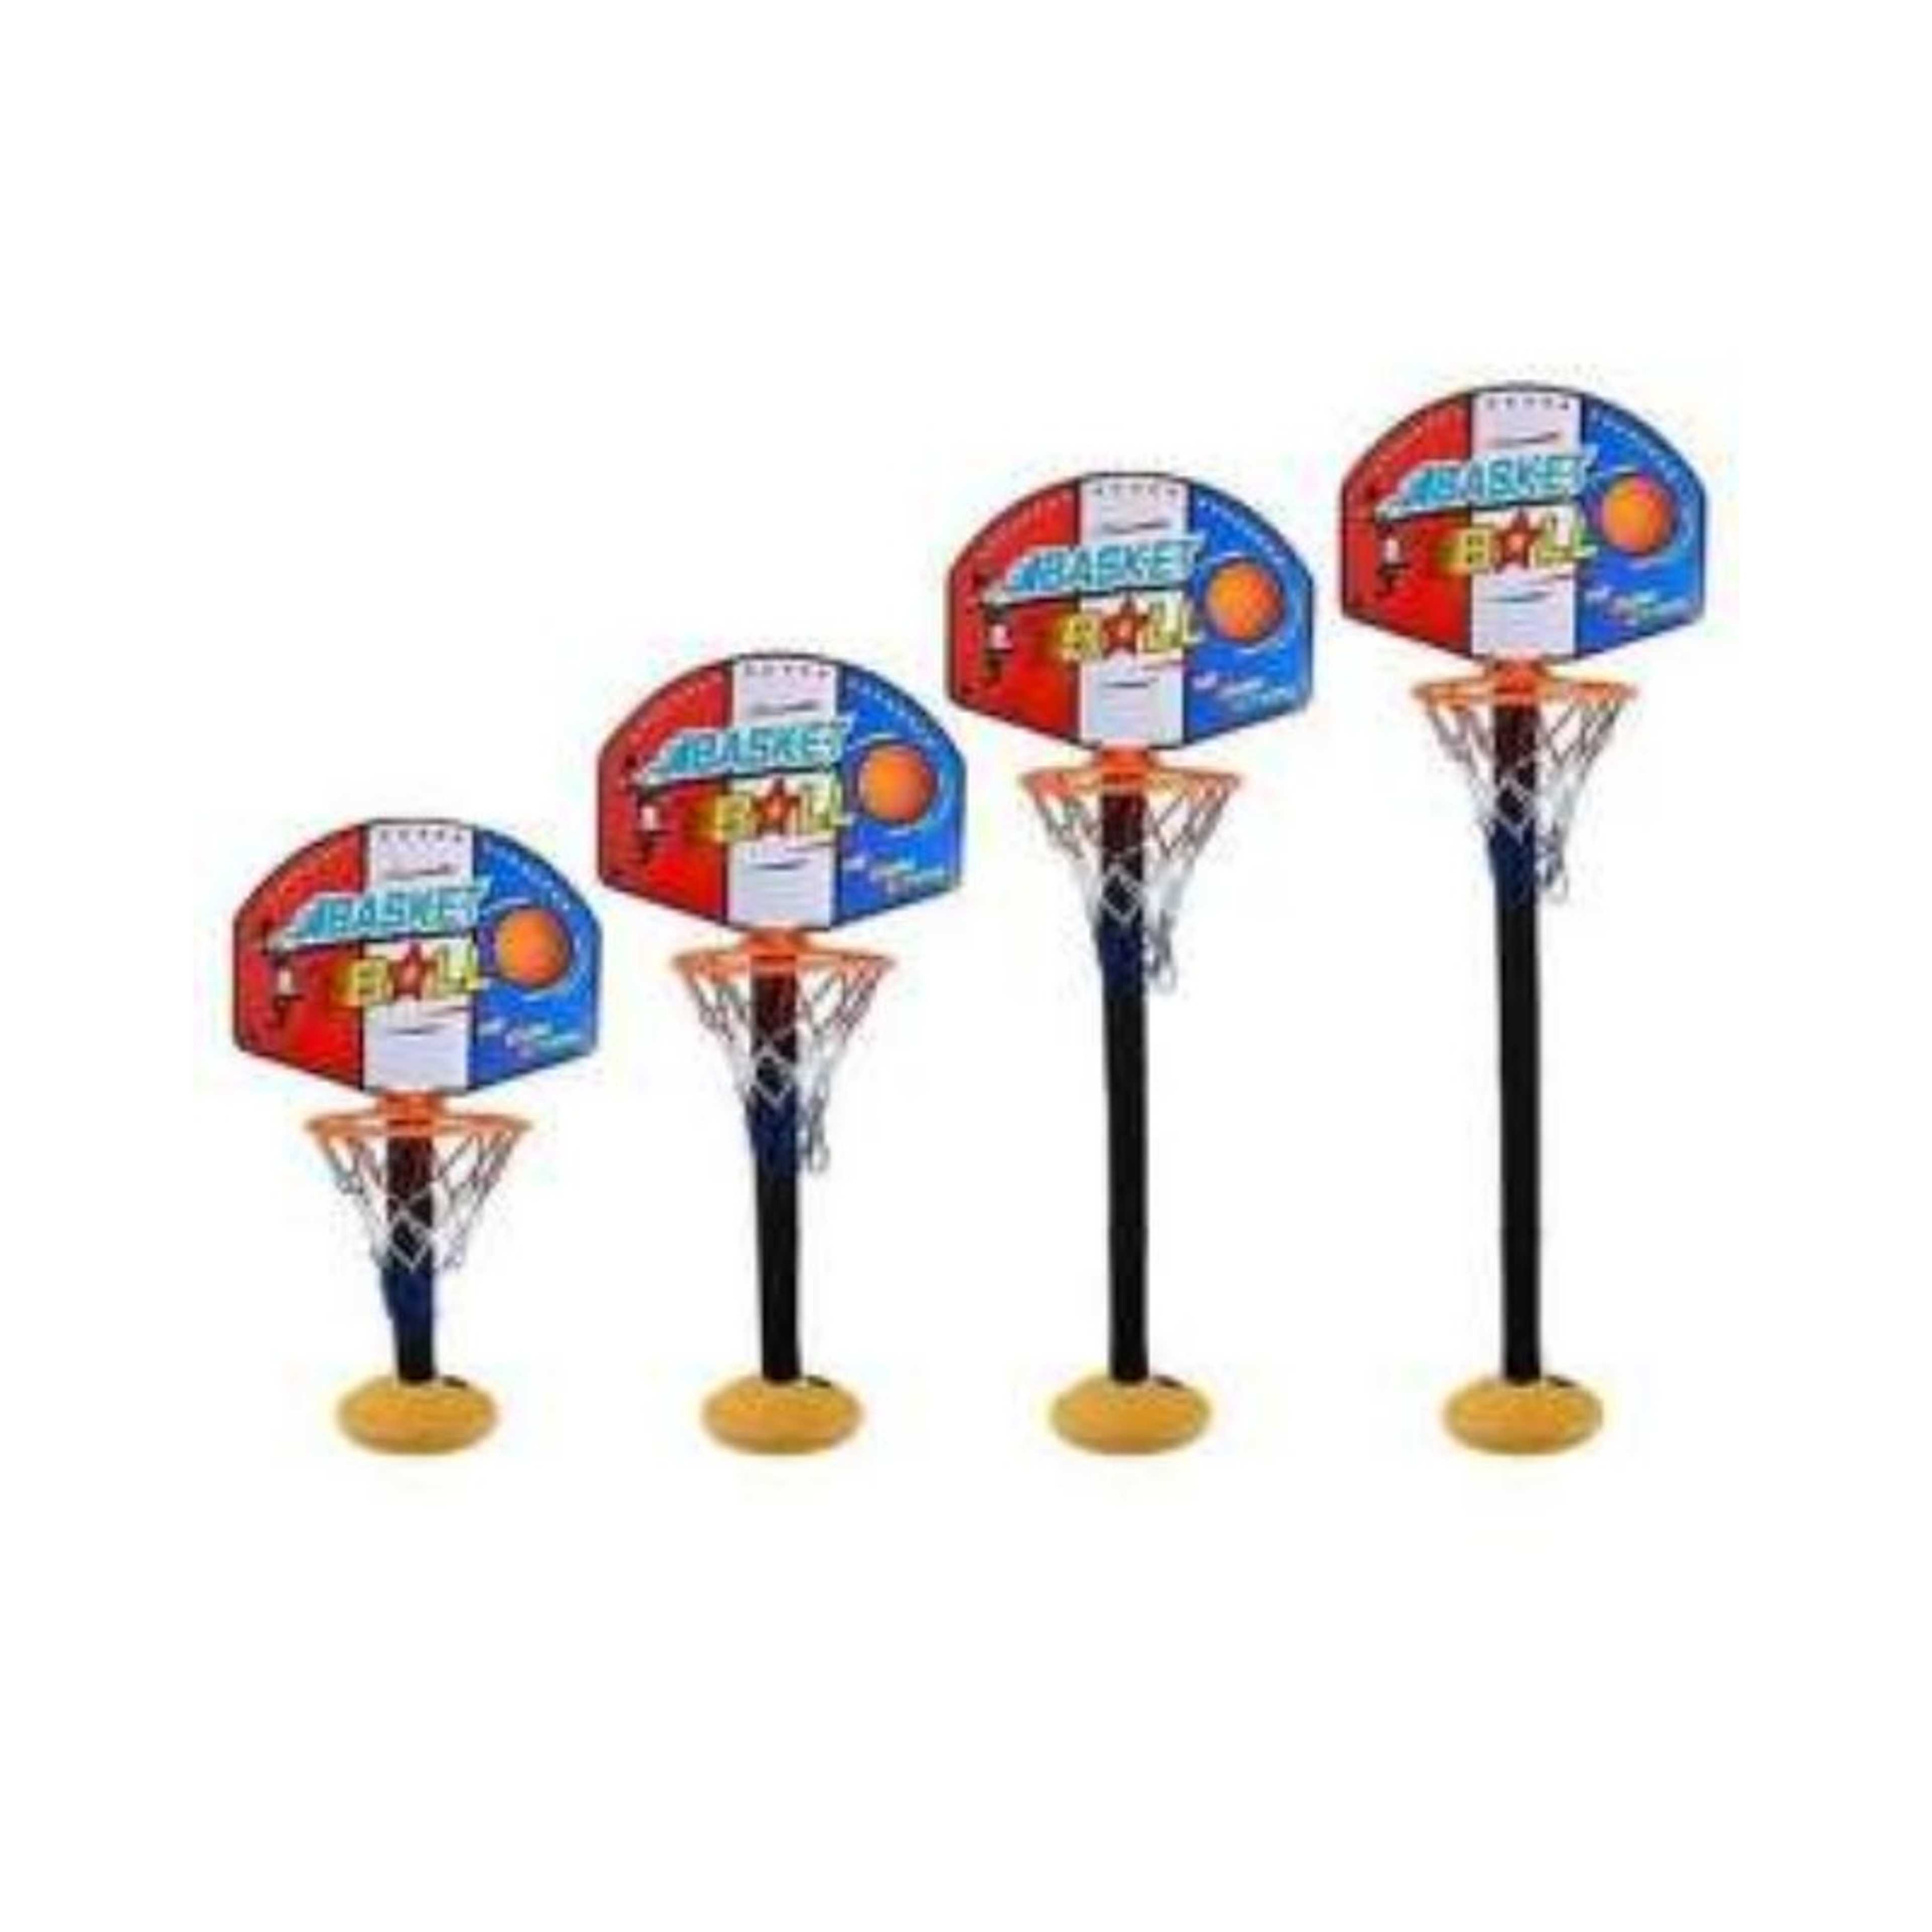 Basket Ball Play Set For Kids - Multi Color